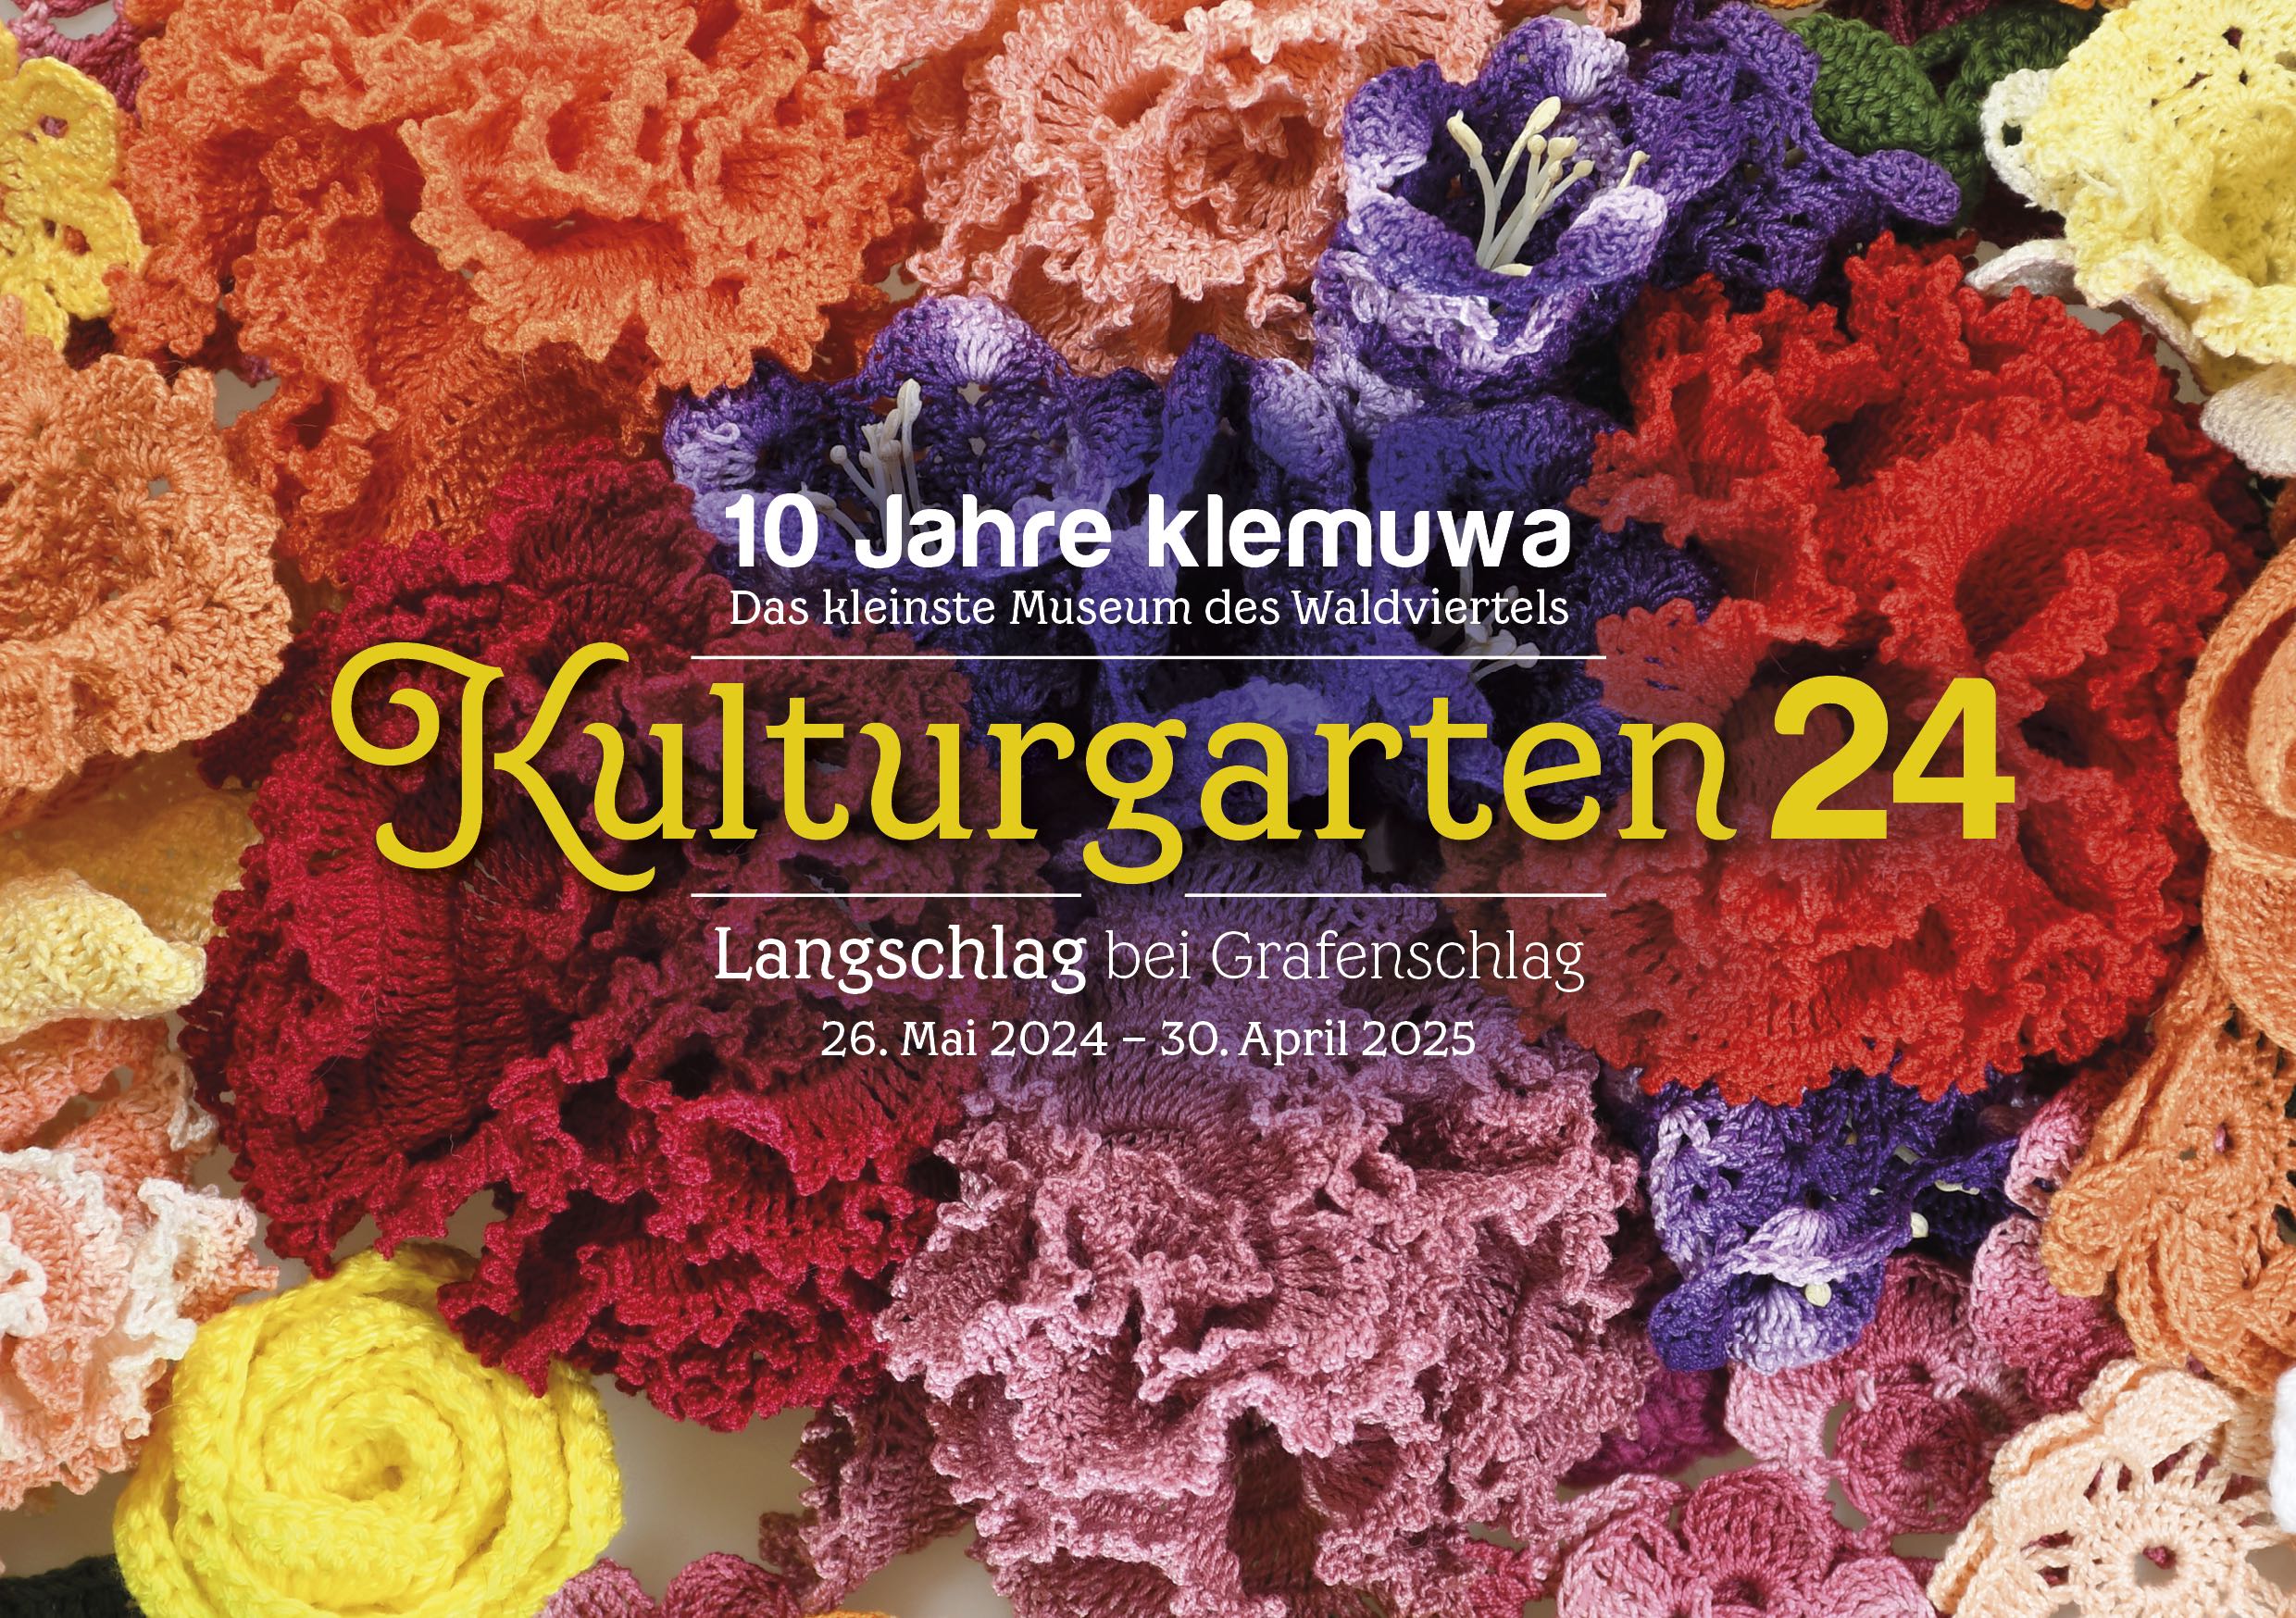 Eröffnung im klemuwa - Kulturgarten 24